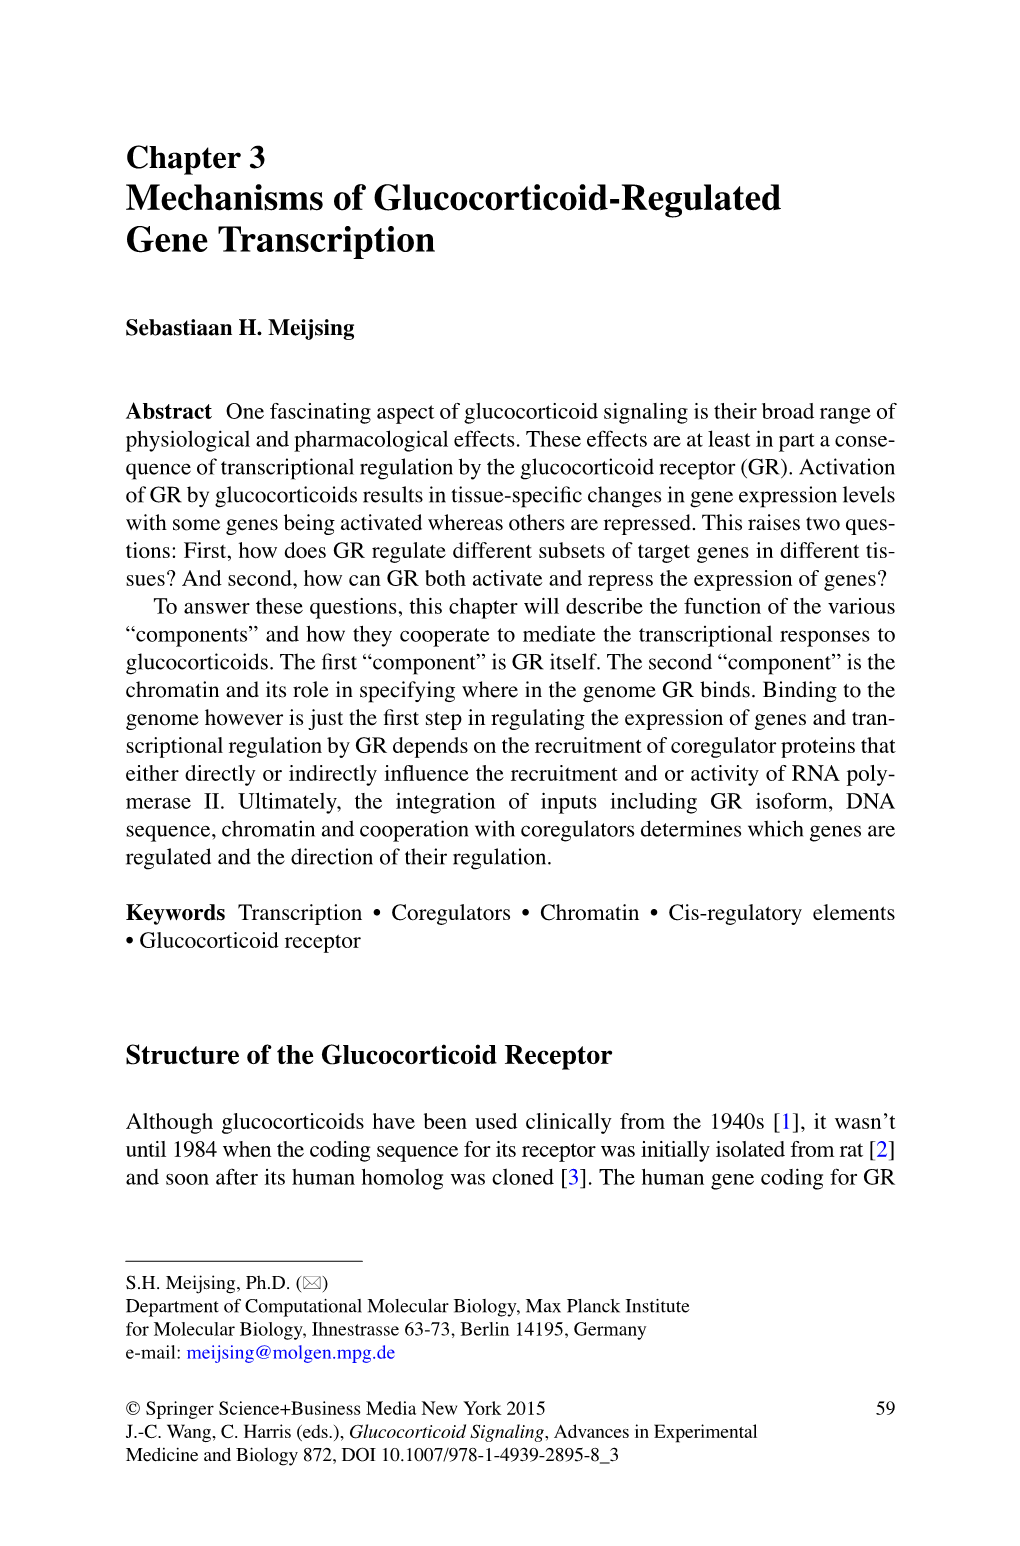 Chapter 3 Mechanisms of Glucocorticoid-Regulated Gene Transcription